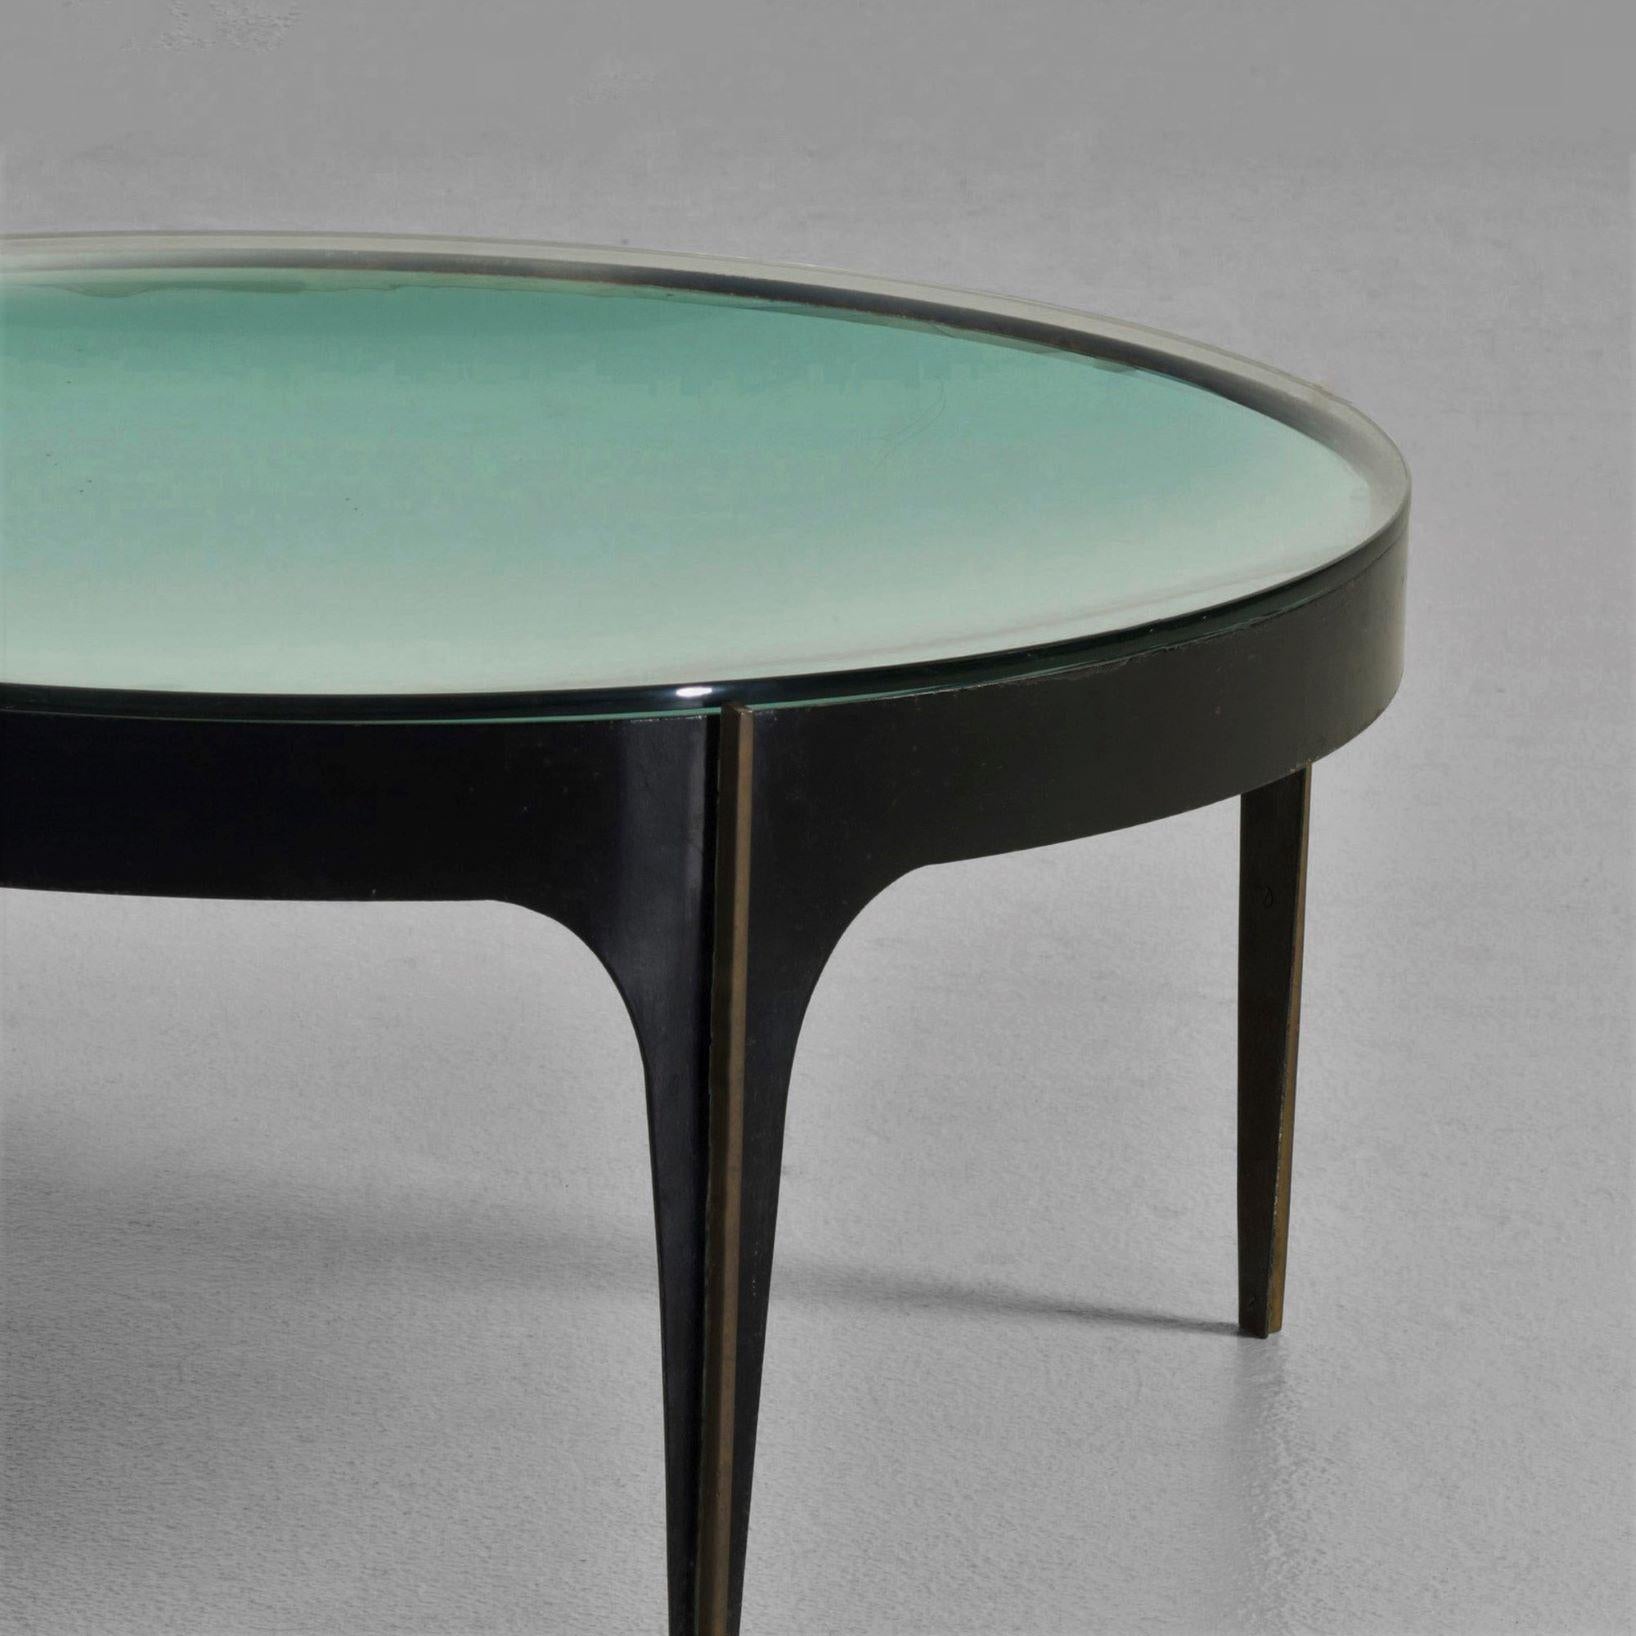 Italian Max Ingrand Coffee Table for Fontana Arte, Mod. 1774, Italy, circa 1958 For Sale